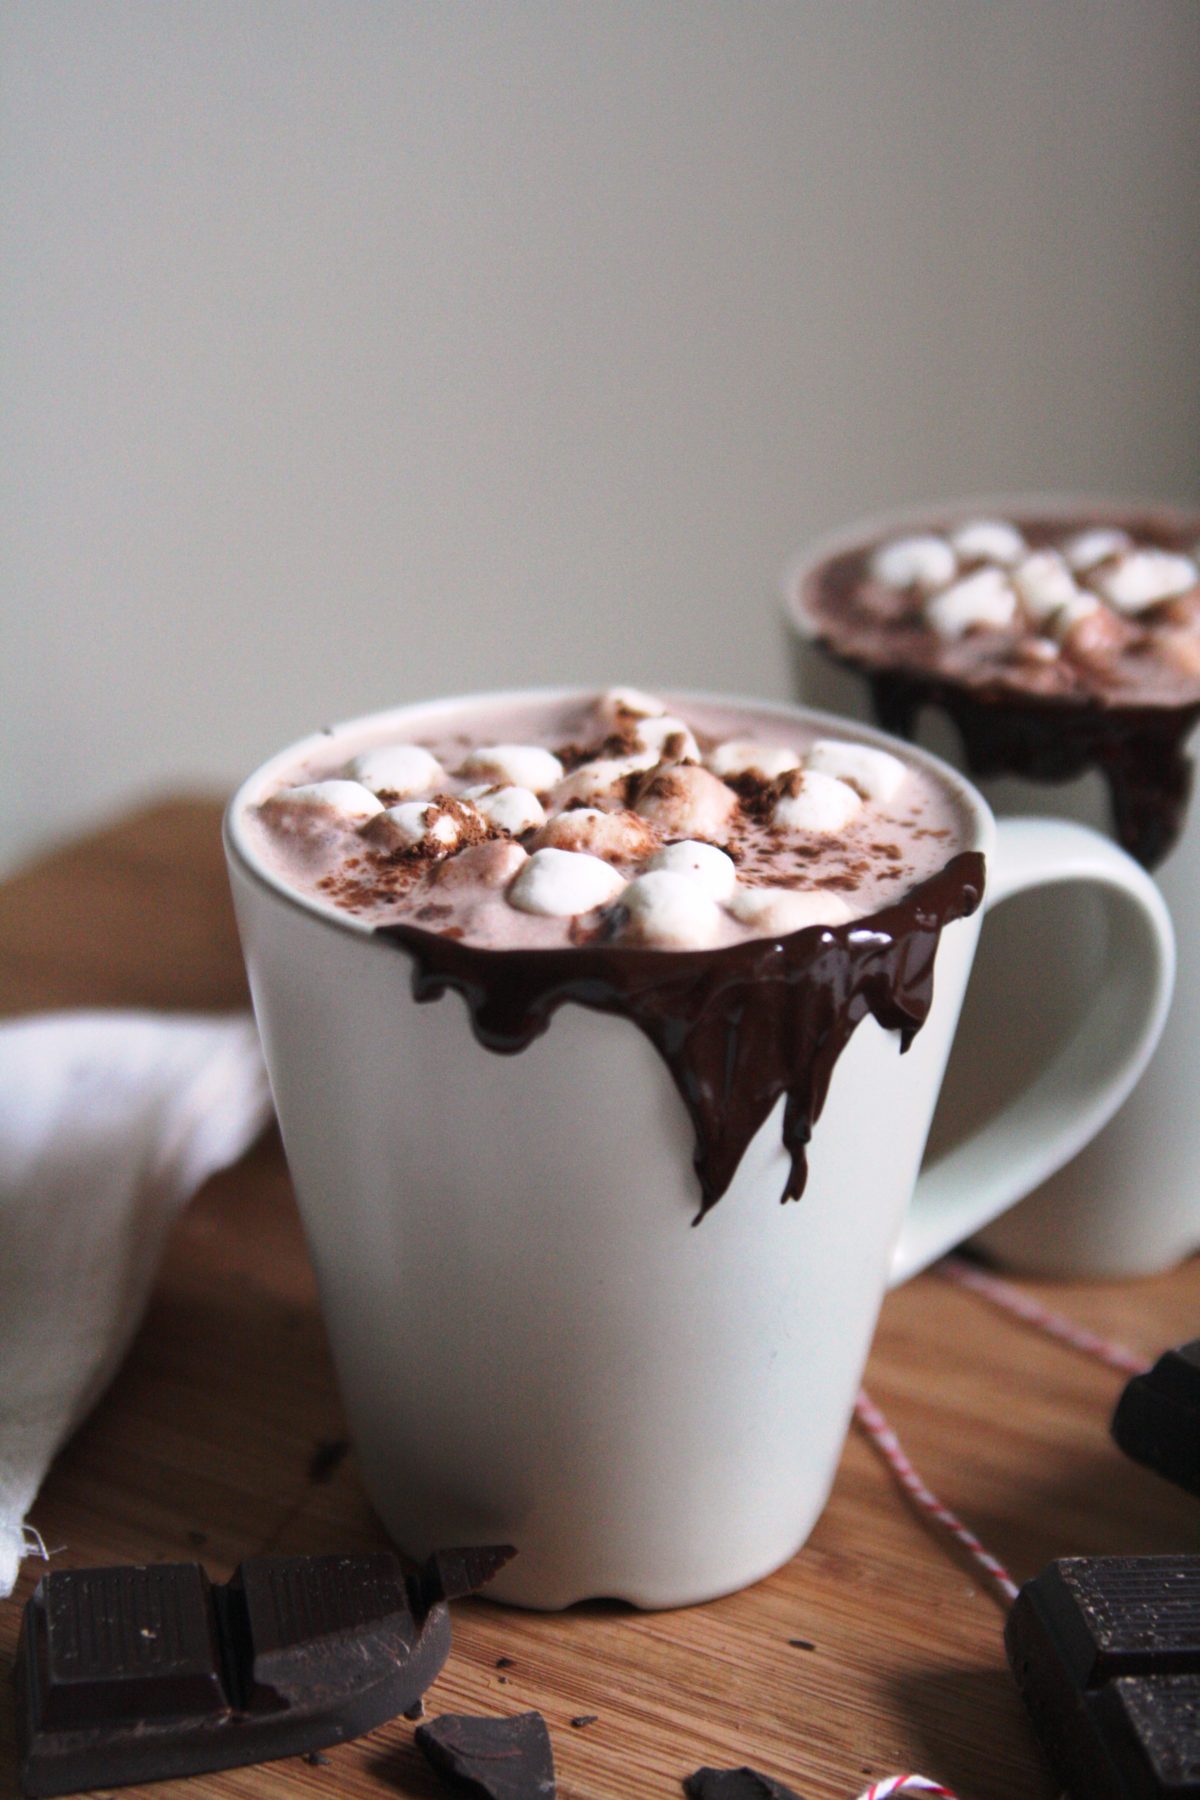 How to make hot chocolate